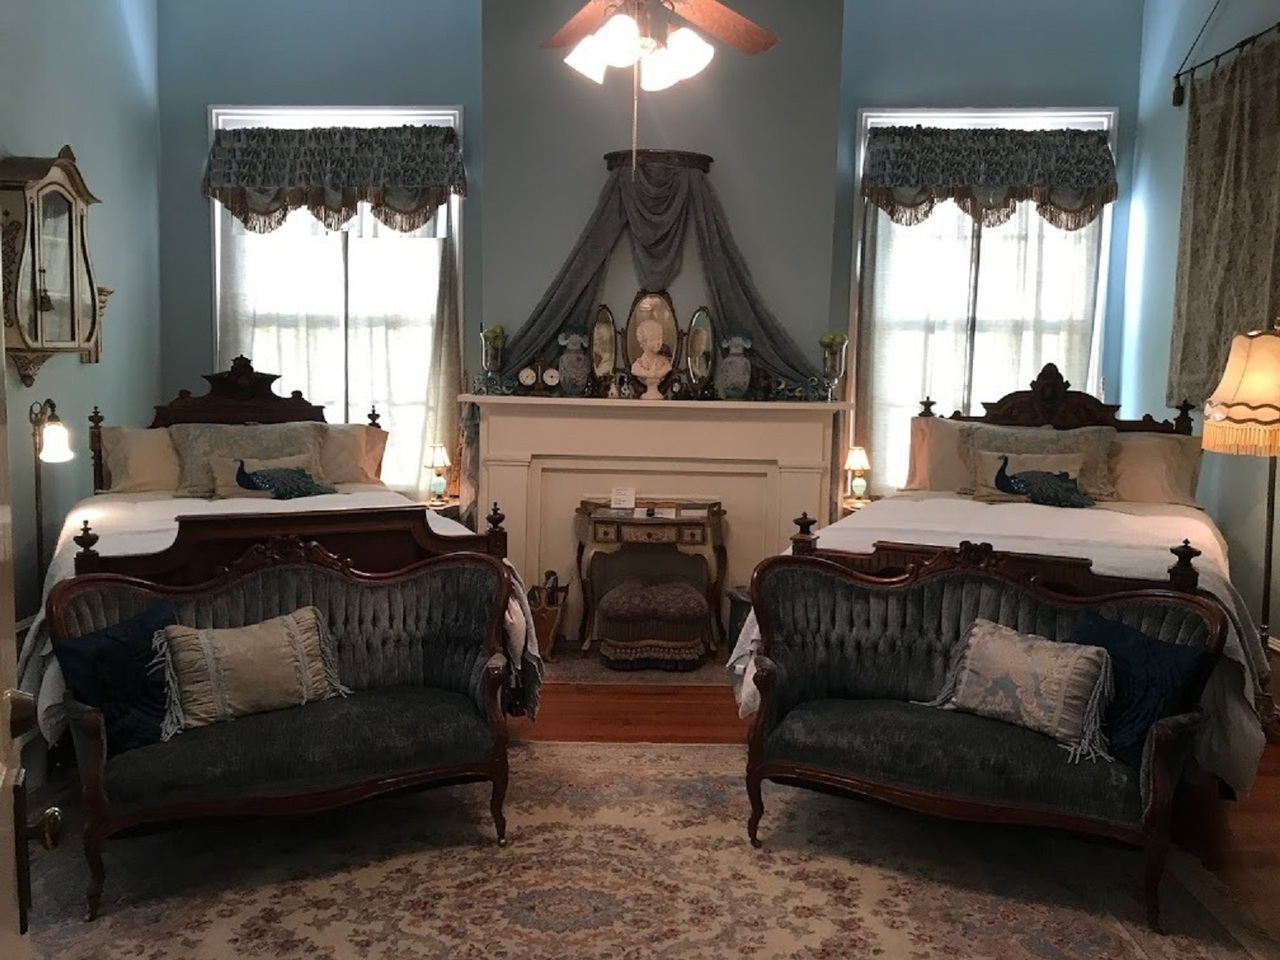 Bedroom with two queen beds